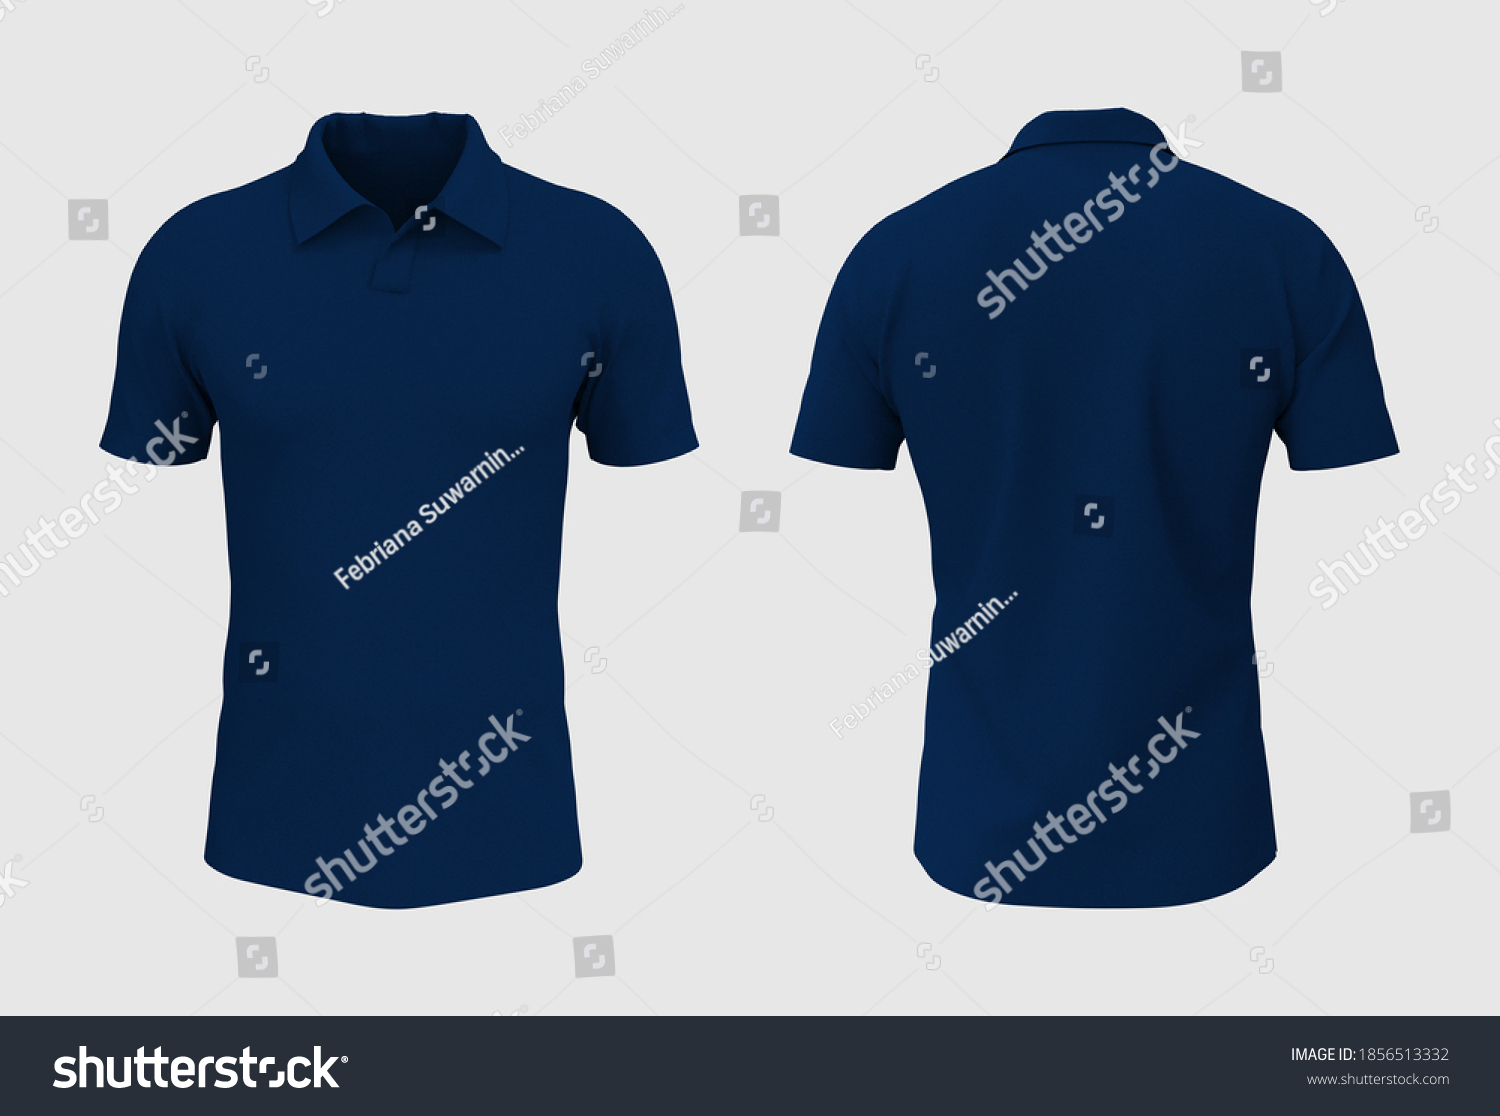 632 Navy blue polo shirt template Images, Stock Photos & Vectors ...